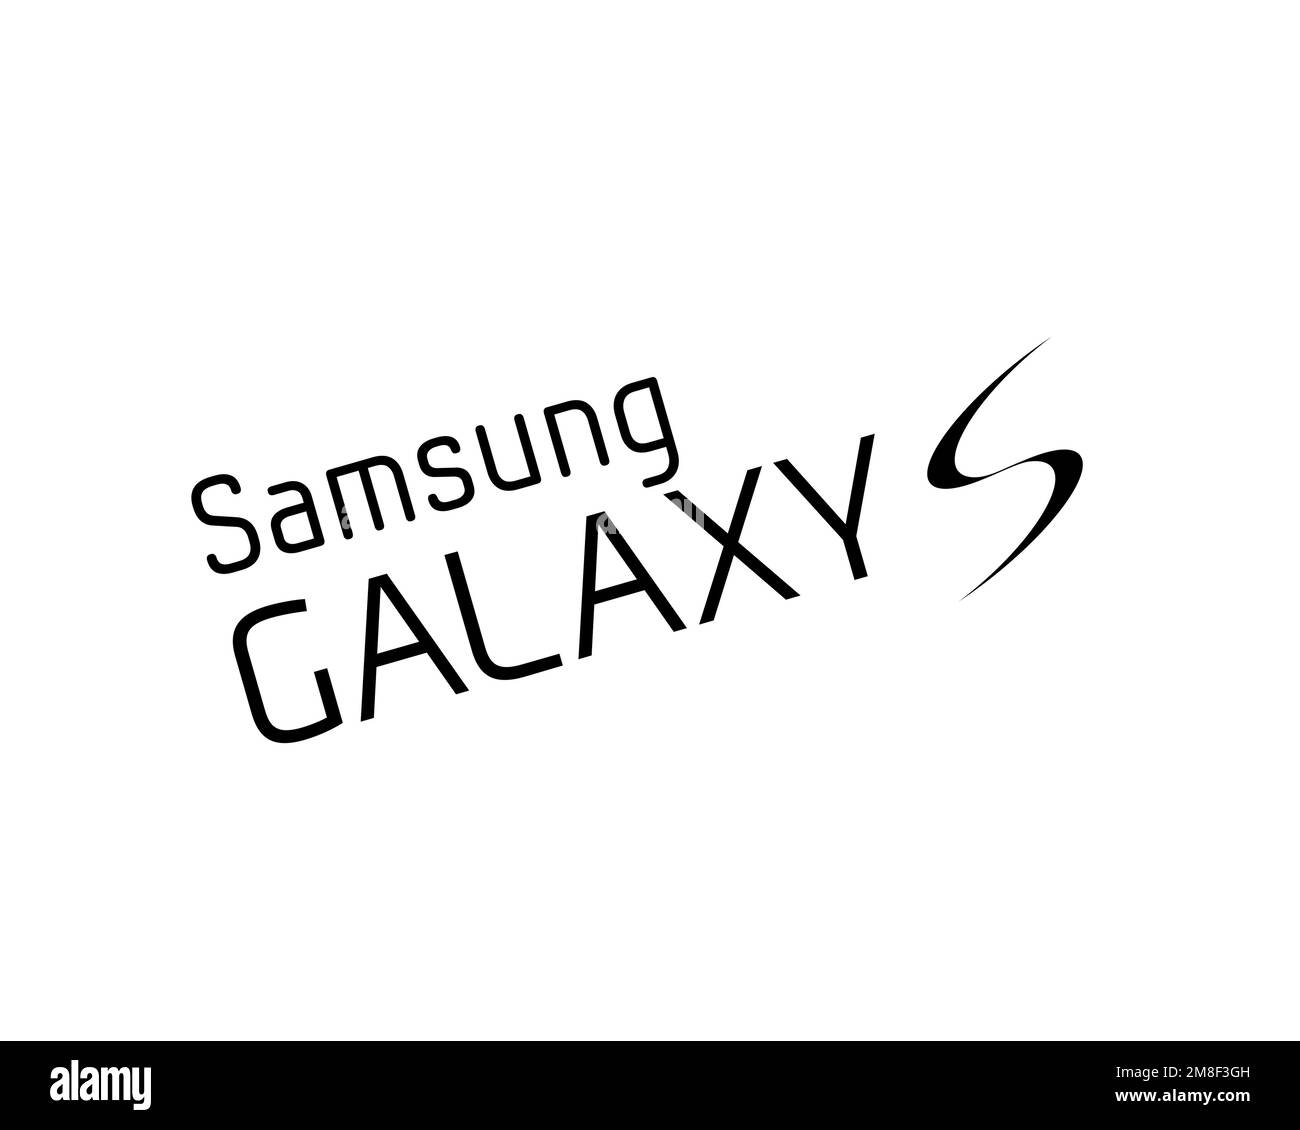 Samsung Continuum, rotated logo, white background Stock Photo